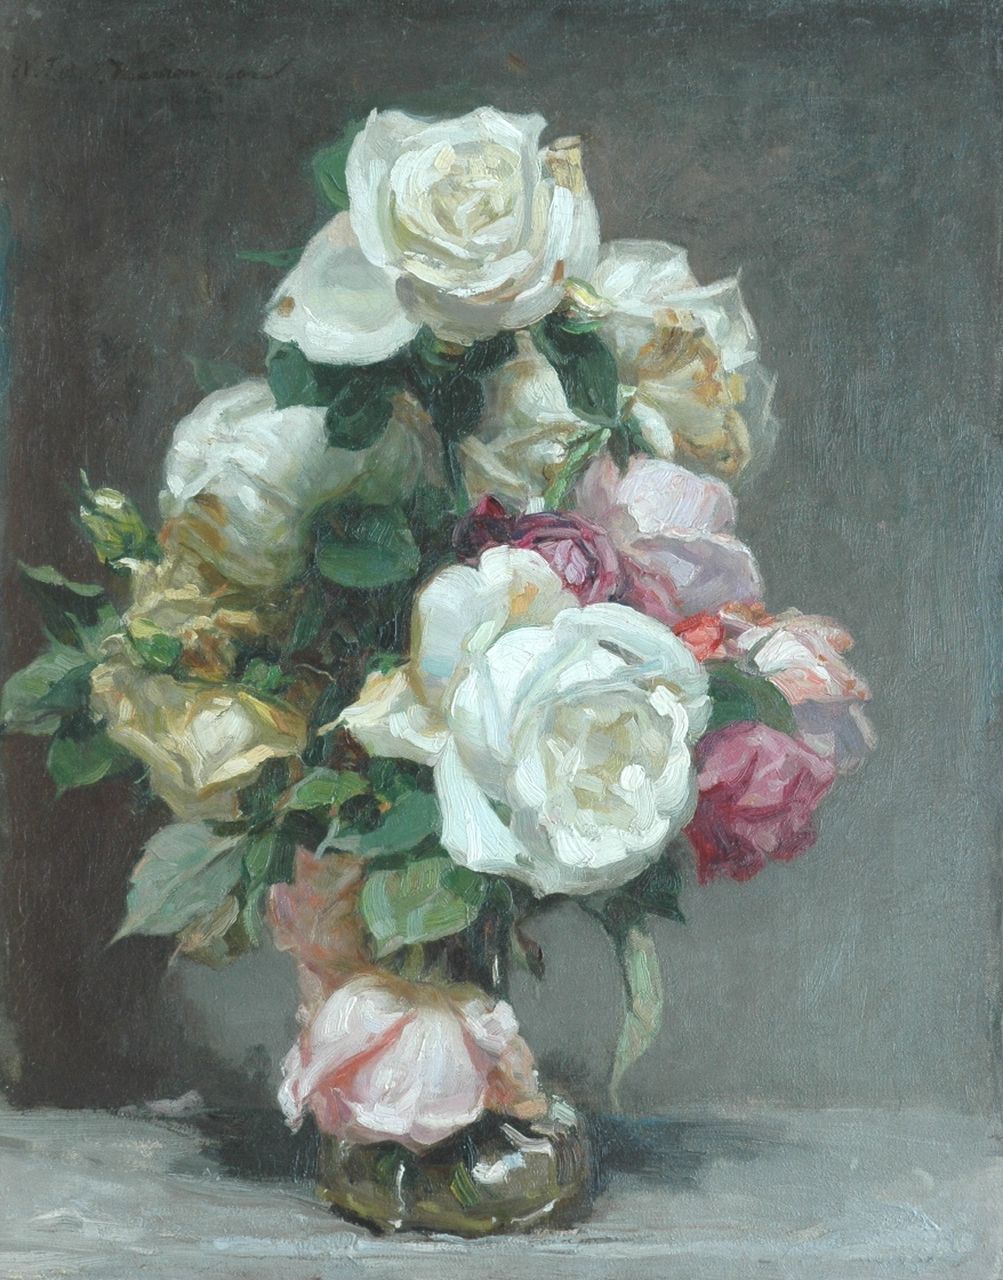 Vaarzon Morel W.F.A.I.  | Wilhelm Ferdinand Abraham Isaac 'Willem' Vaarzon Morel, Tea roses, Öl auf Leinwand 50,8 x 40,8 cm, signed u.l.